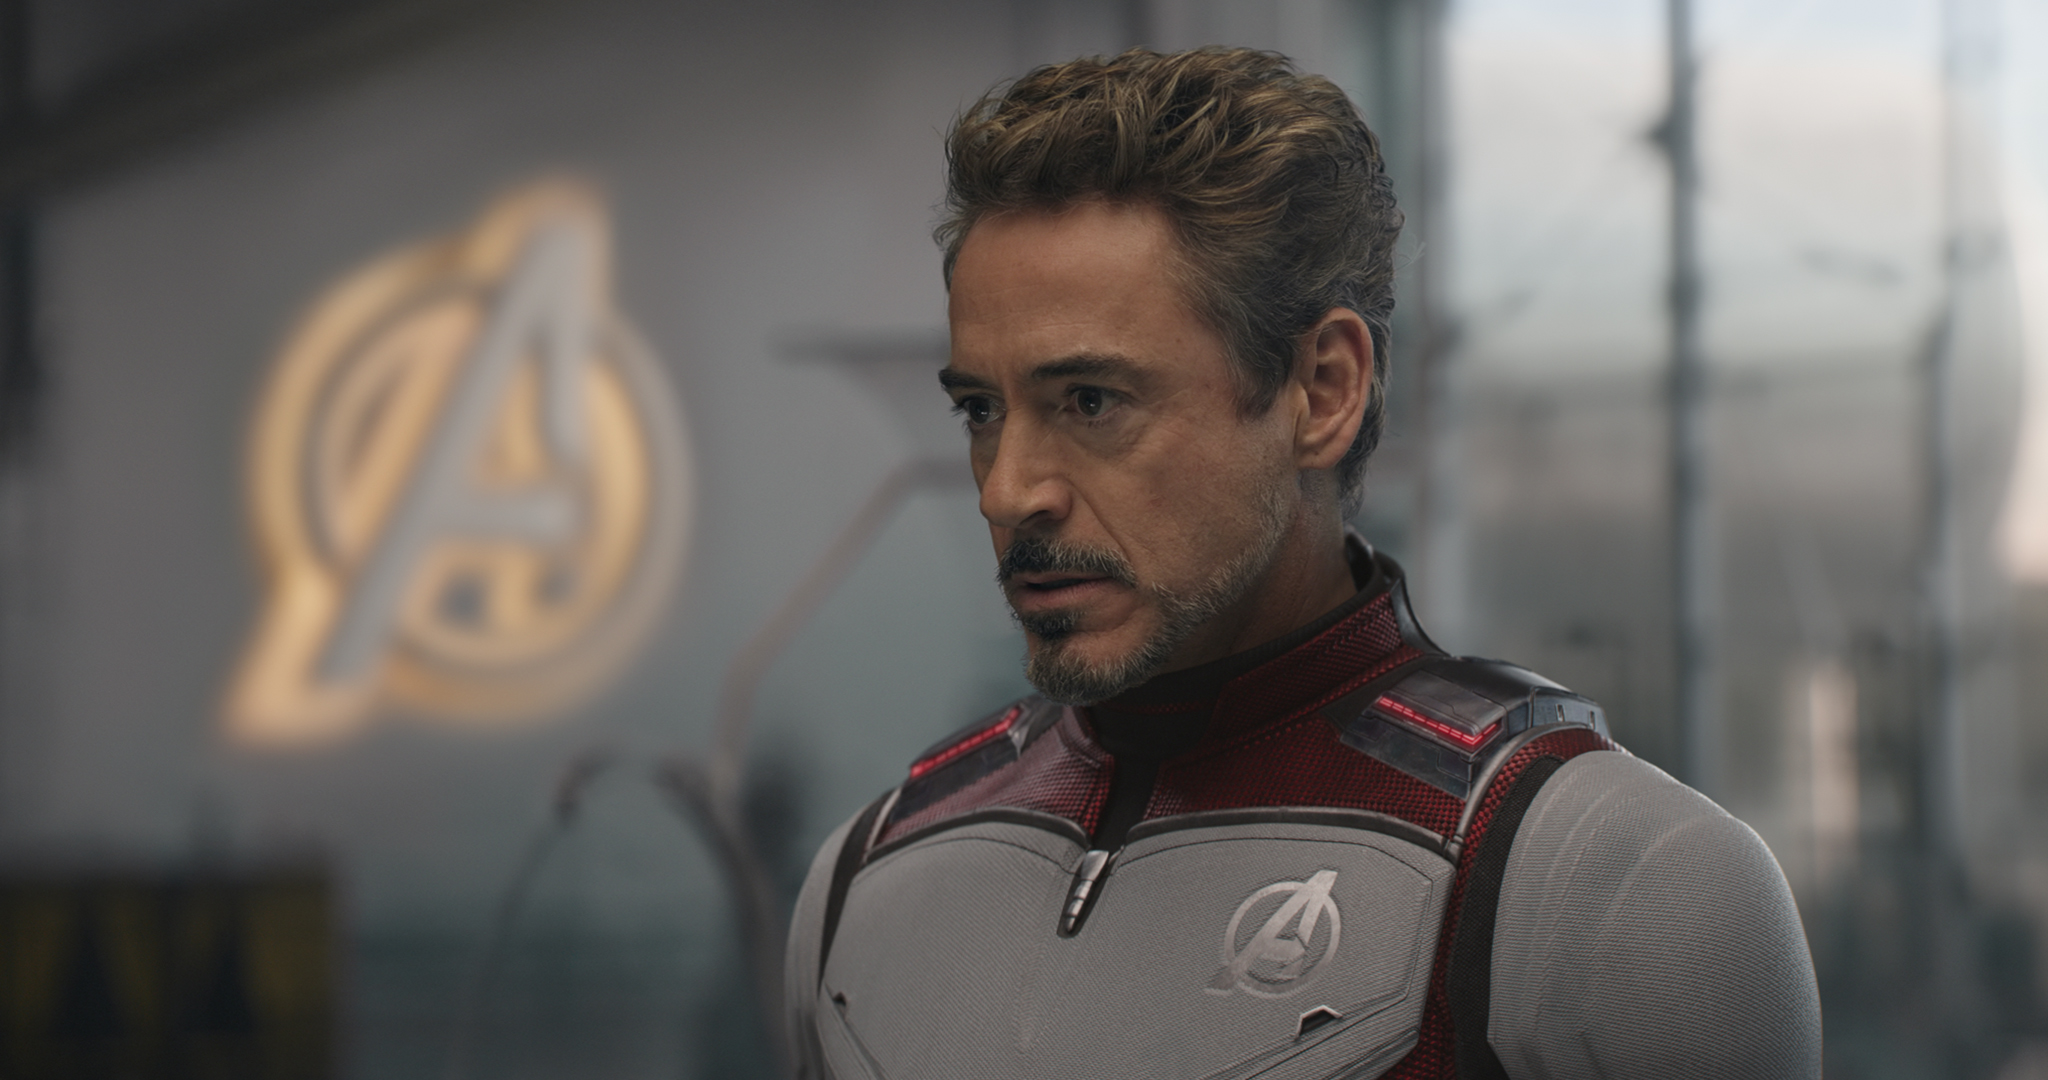 Descarga gratuita de fondo de pantalla para móvil de Los Vengadores, Robert Downey Jr, Películas, Hombre De Acero, Tony Stark, Vengadores: Endgame.